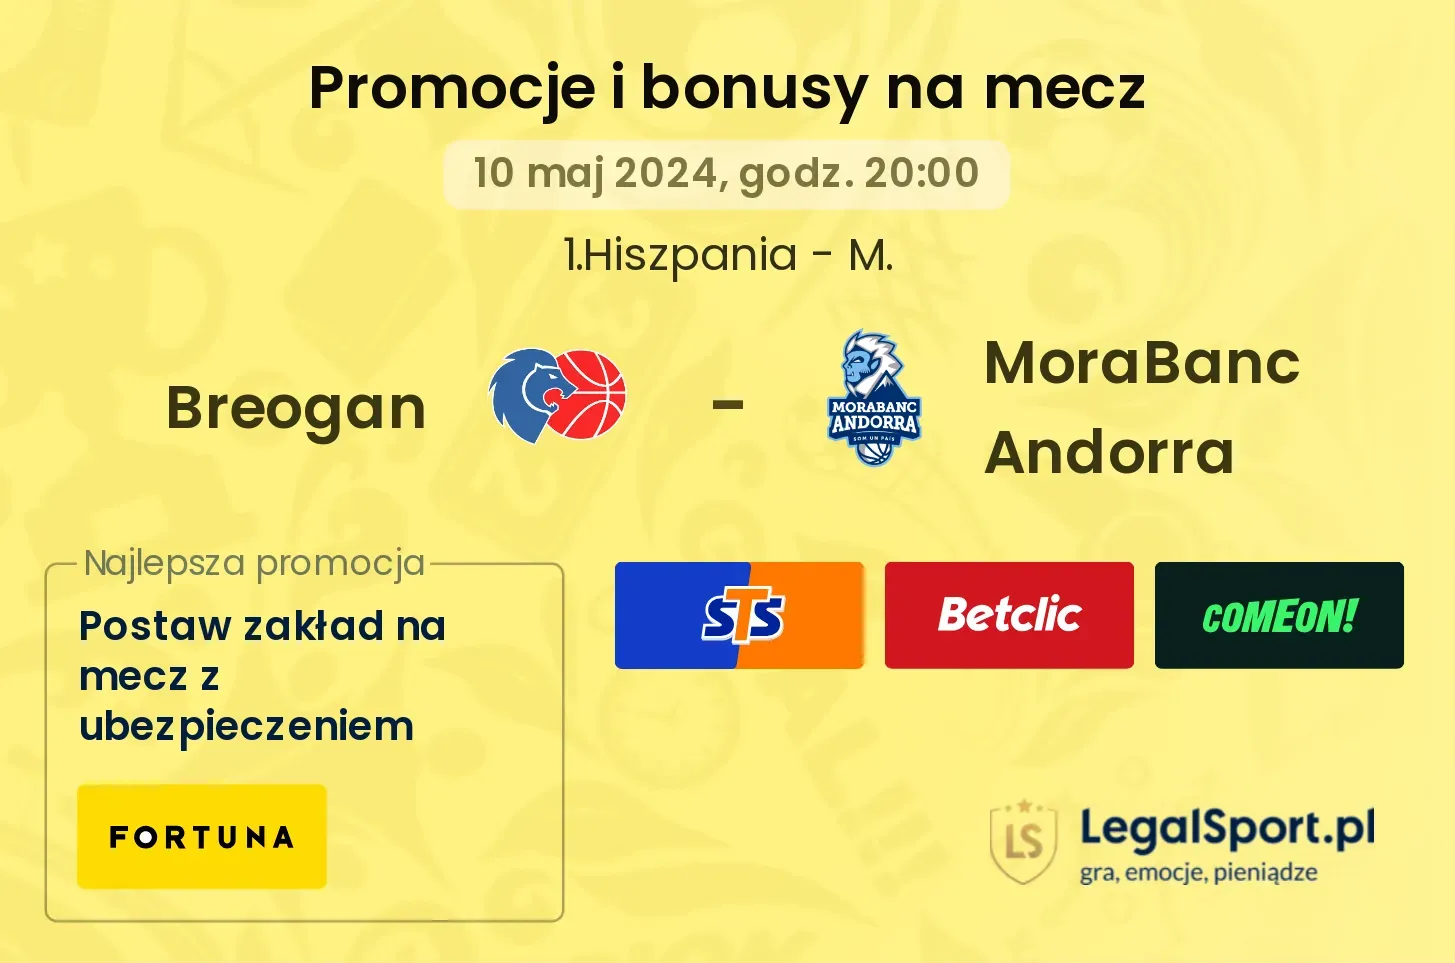 Breogan - MoraBanc Andorra promocje bonusy na mecz